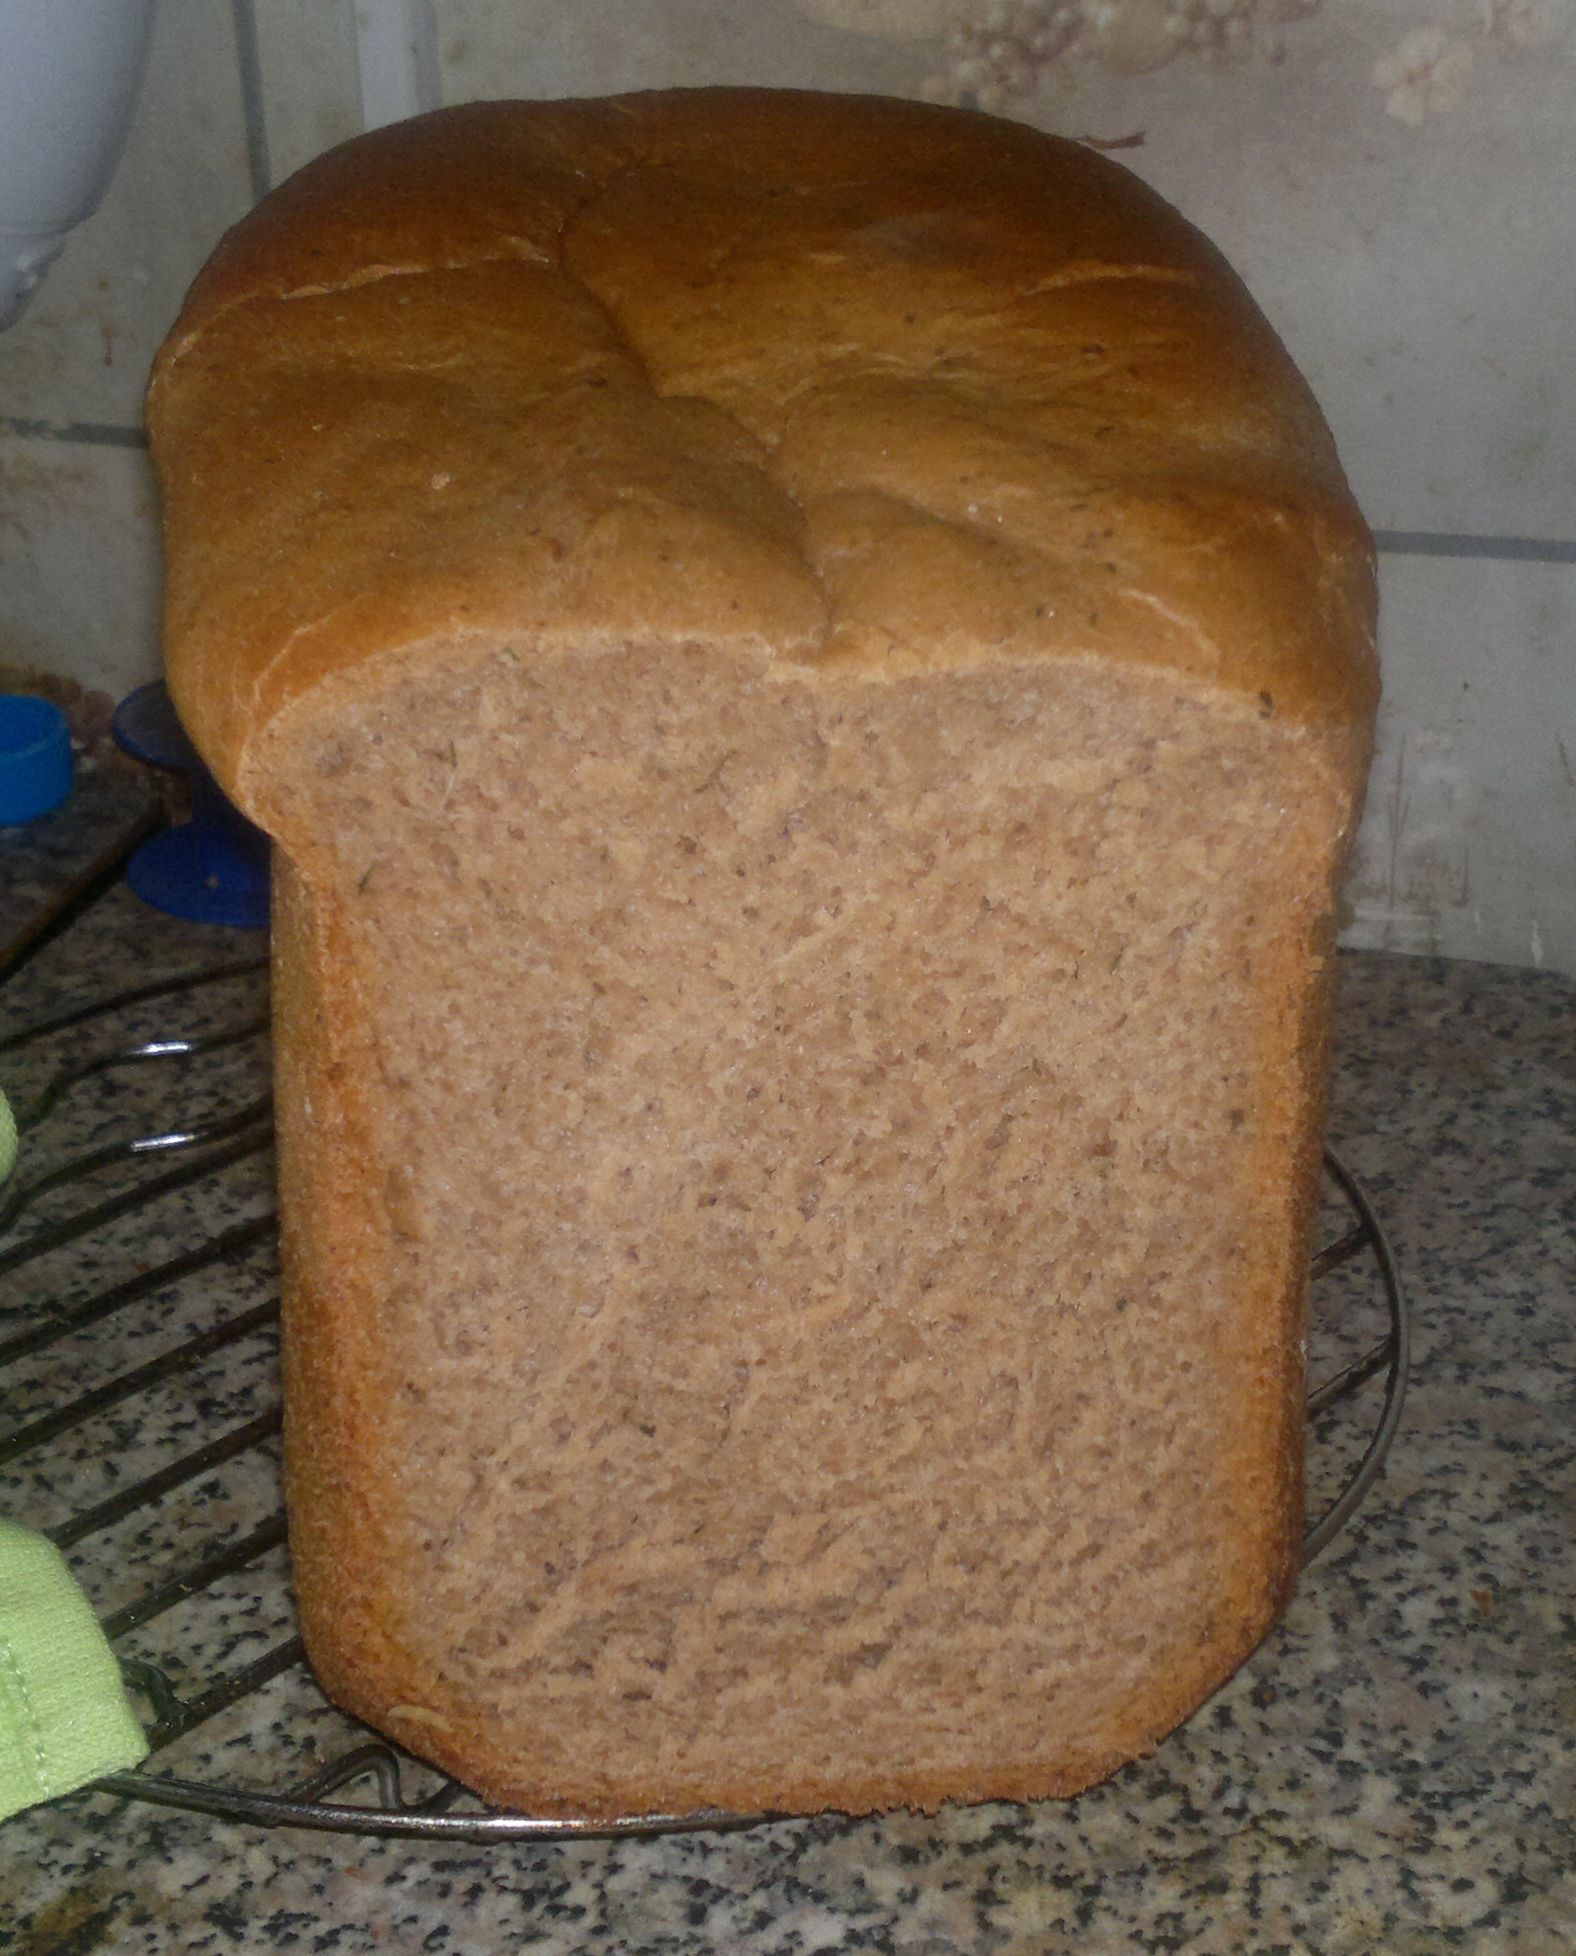 Black bread with red pepper (bread maker)